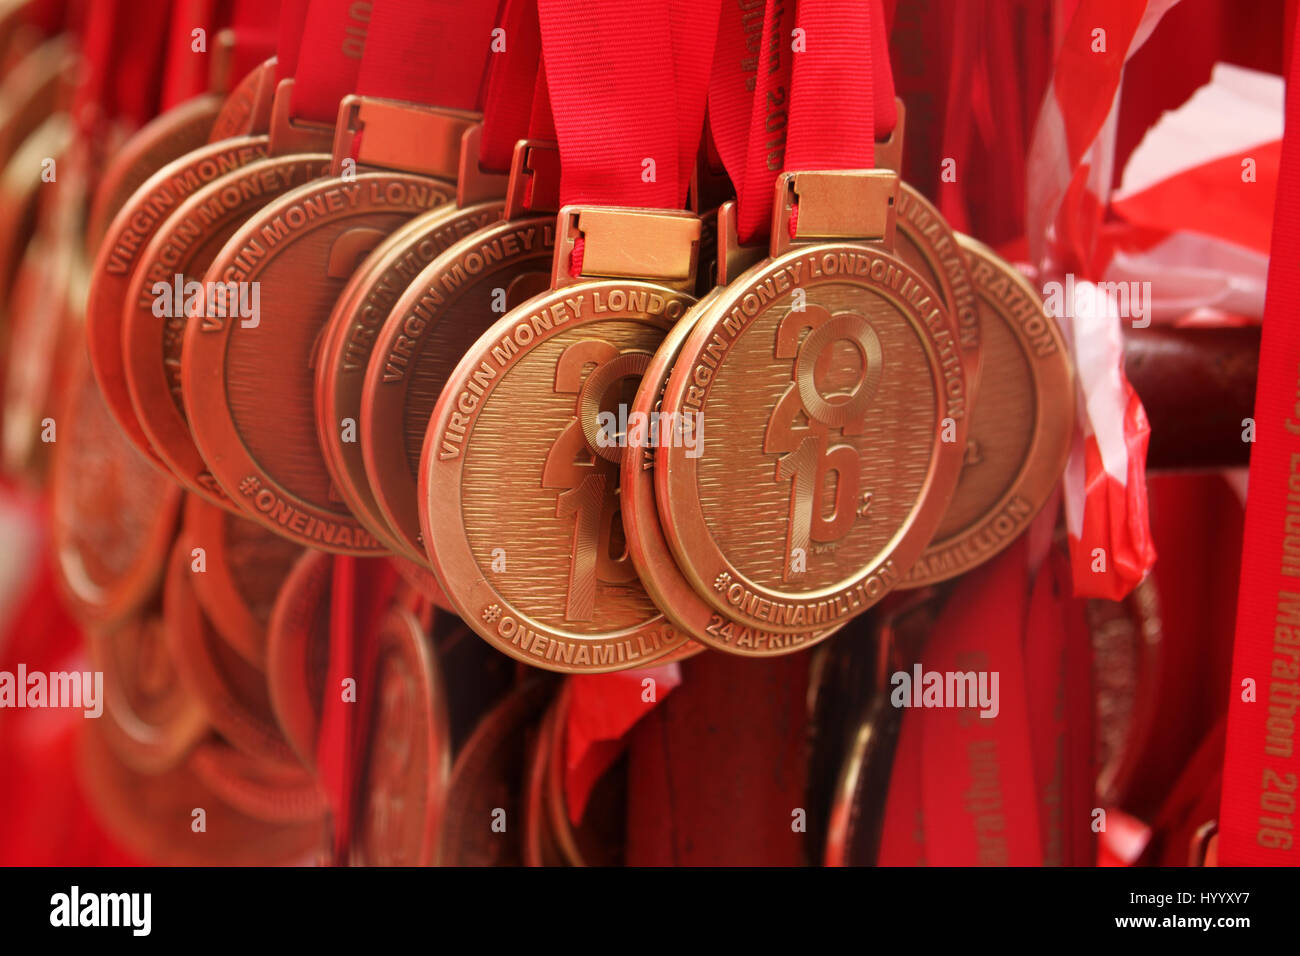 London, UK 24 April 2016. Virgin Money London Marathon medals awaiitng presentation a the Mall. © David Mbiyu/Alamy Live News Stock Photo